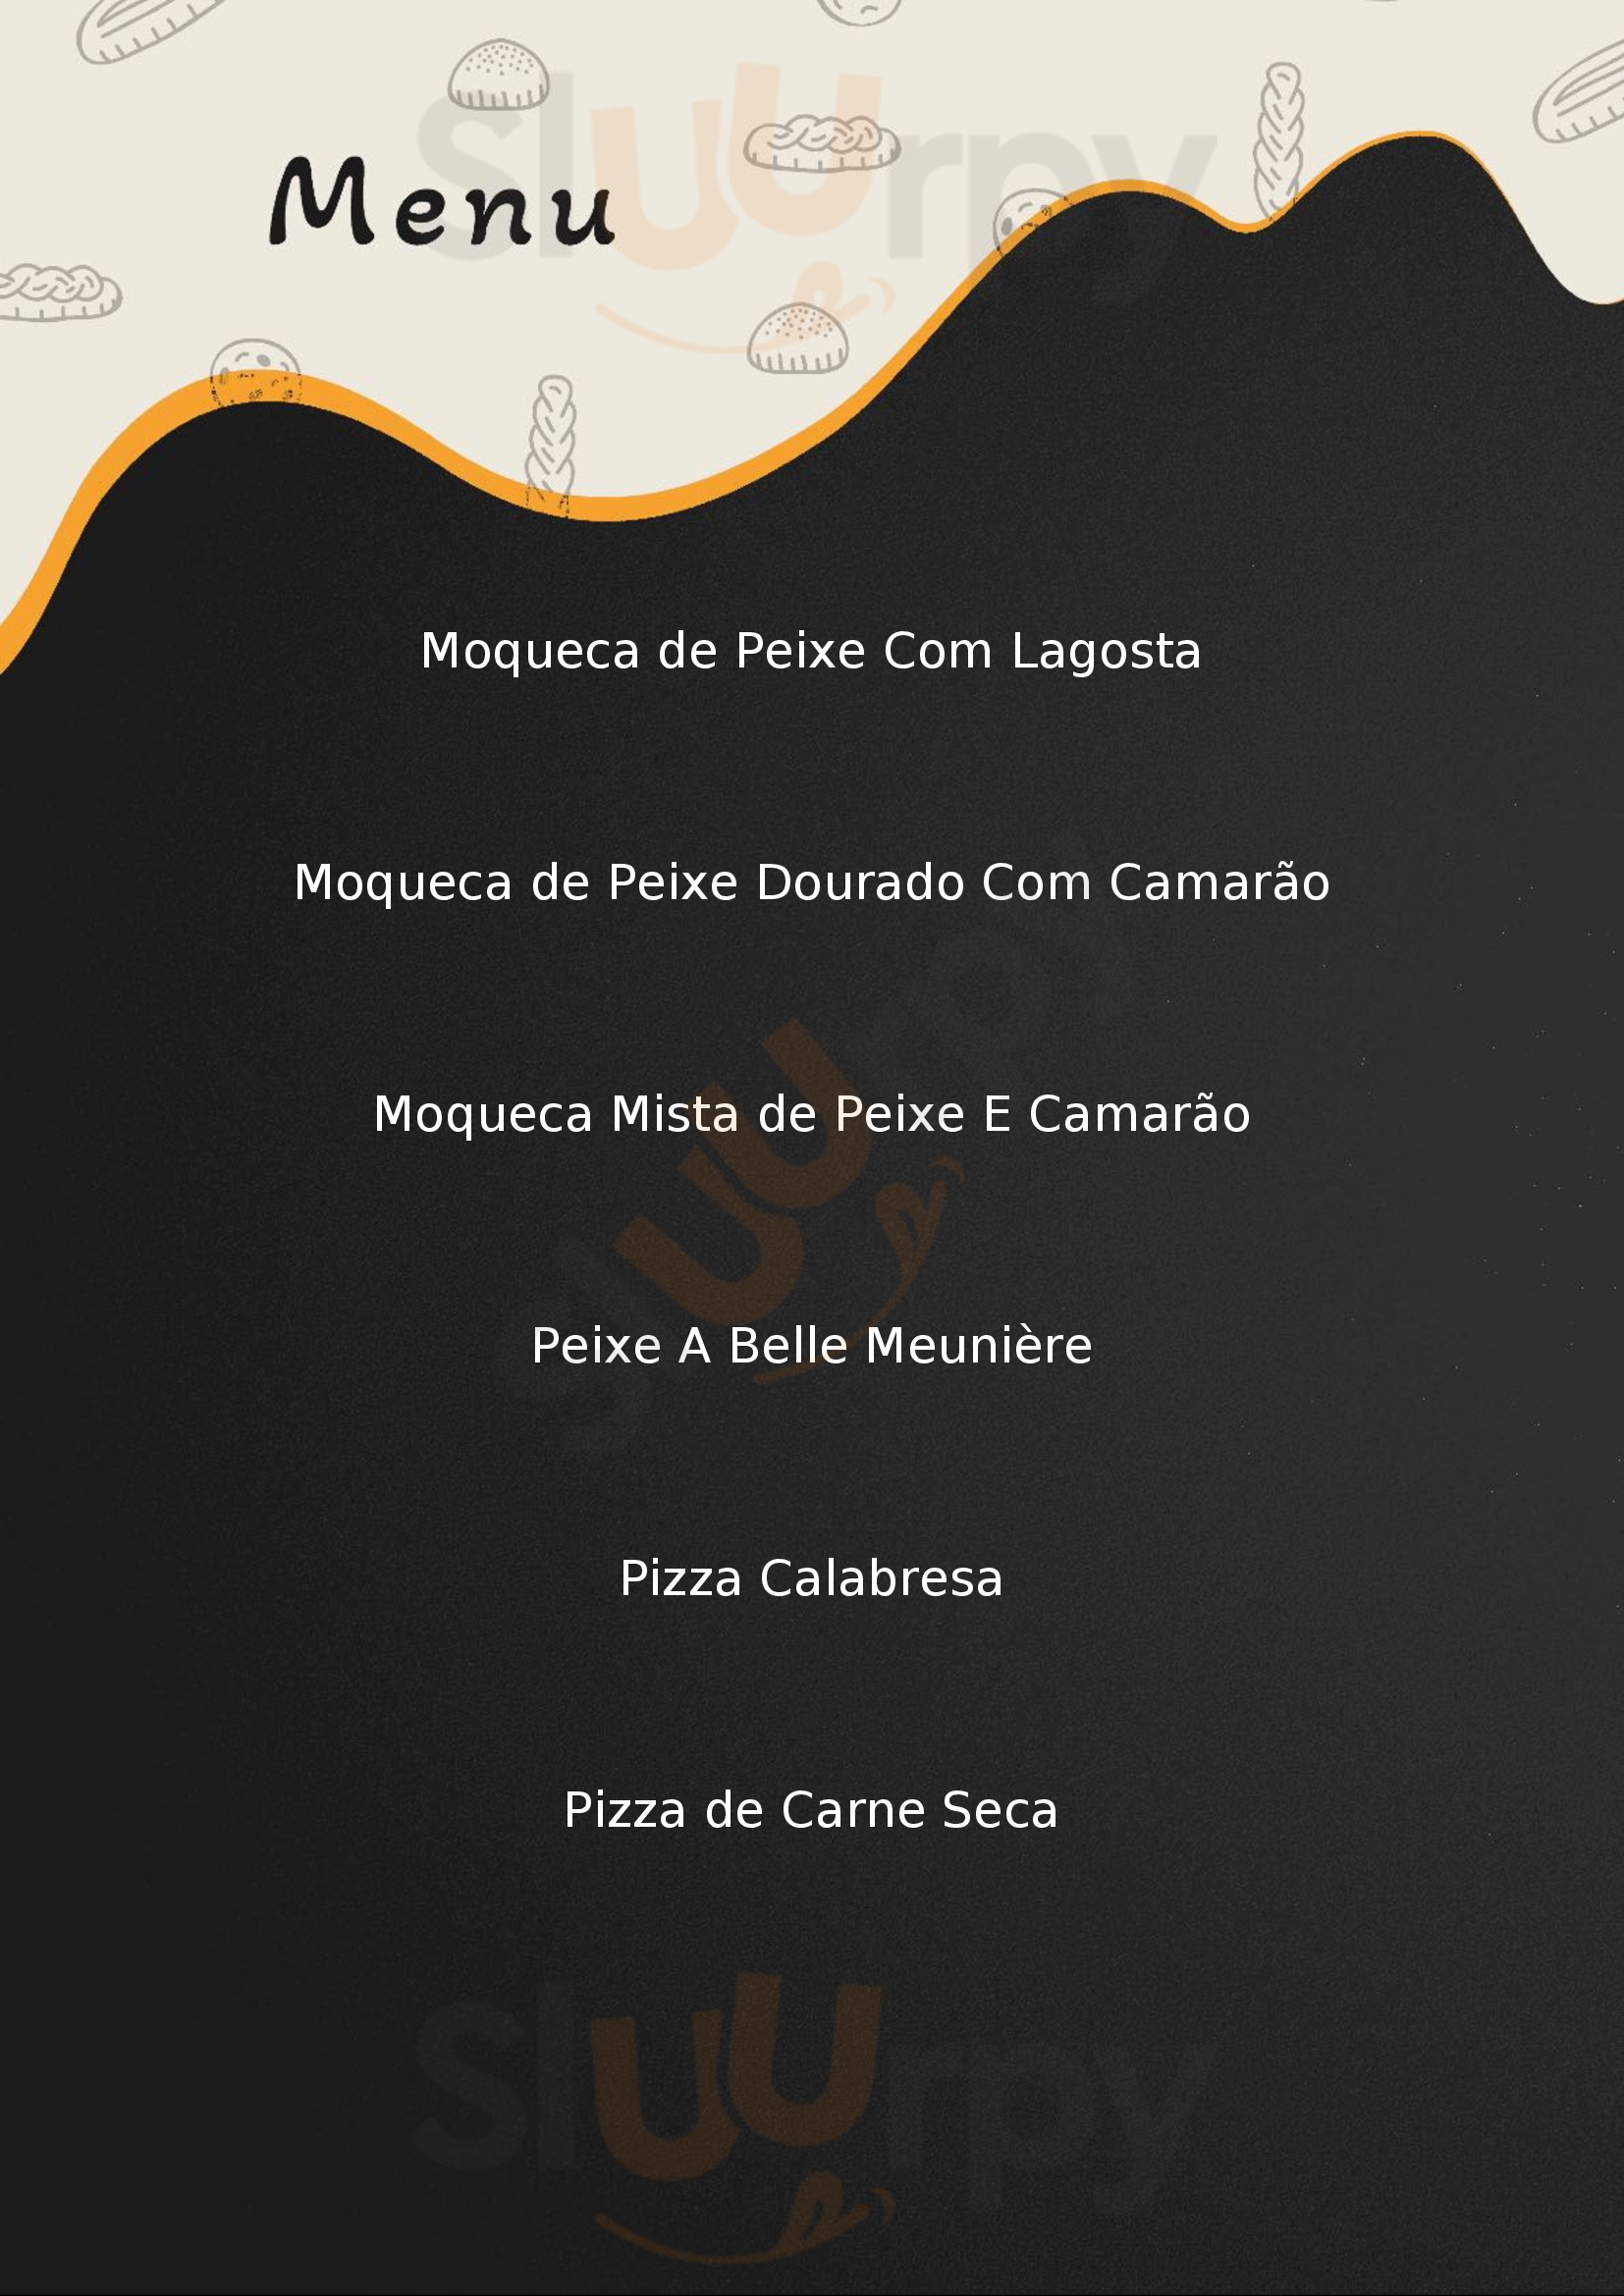 Terra Mae Restaurante Porto Seguro Menu - 1